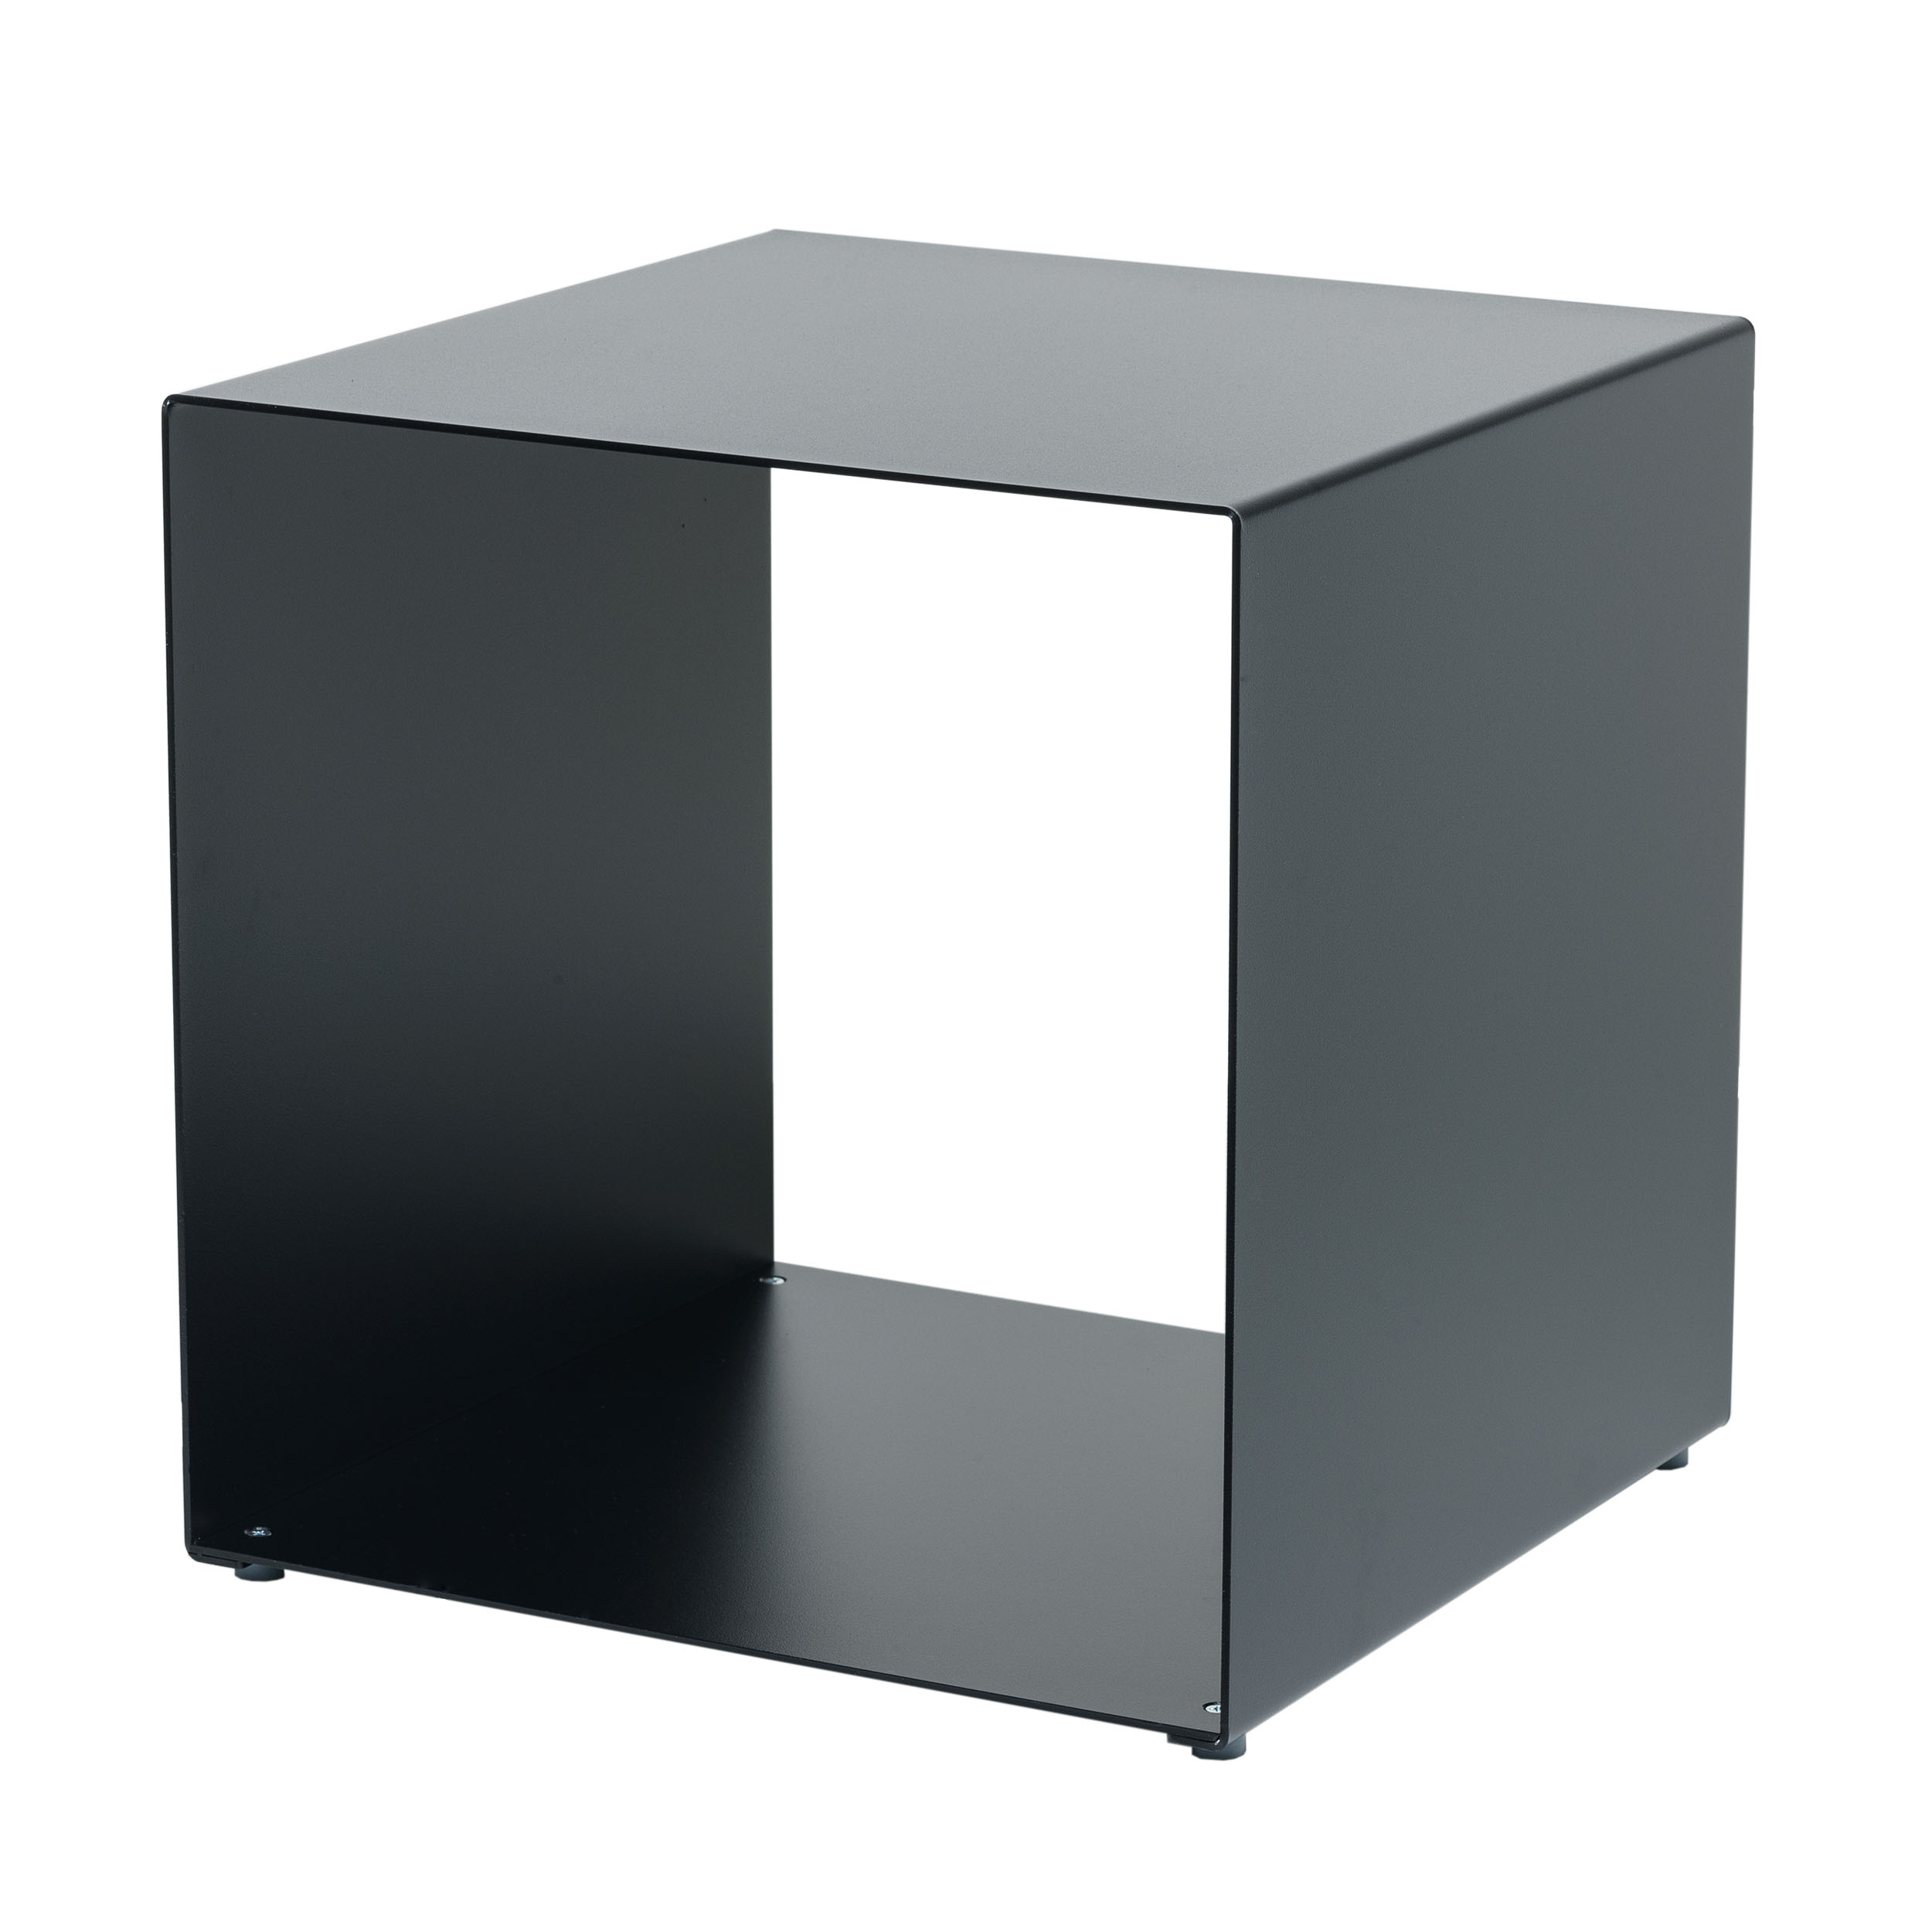 Cubus Cube modulaire